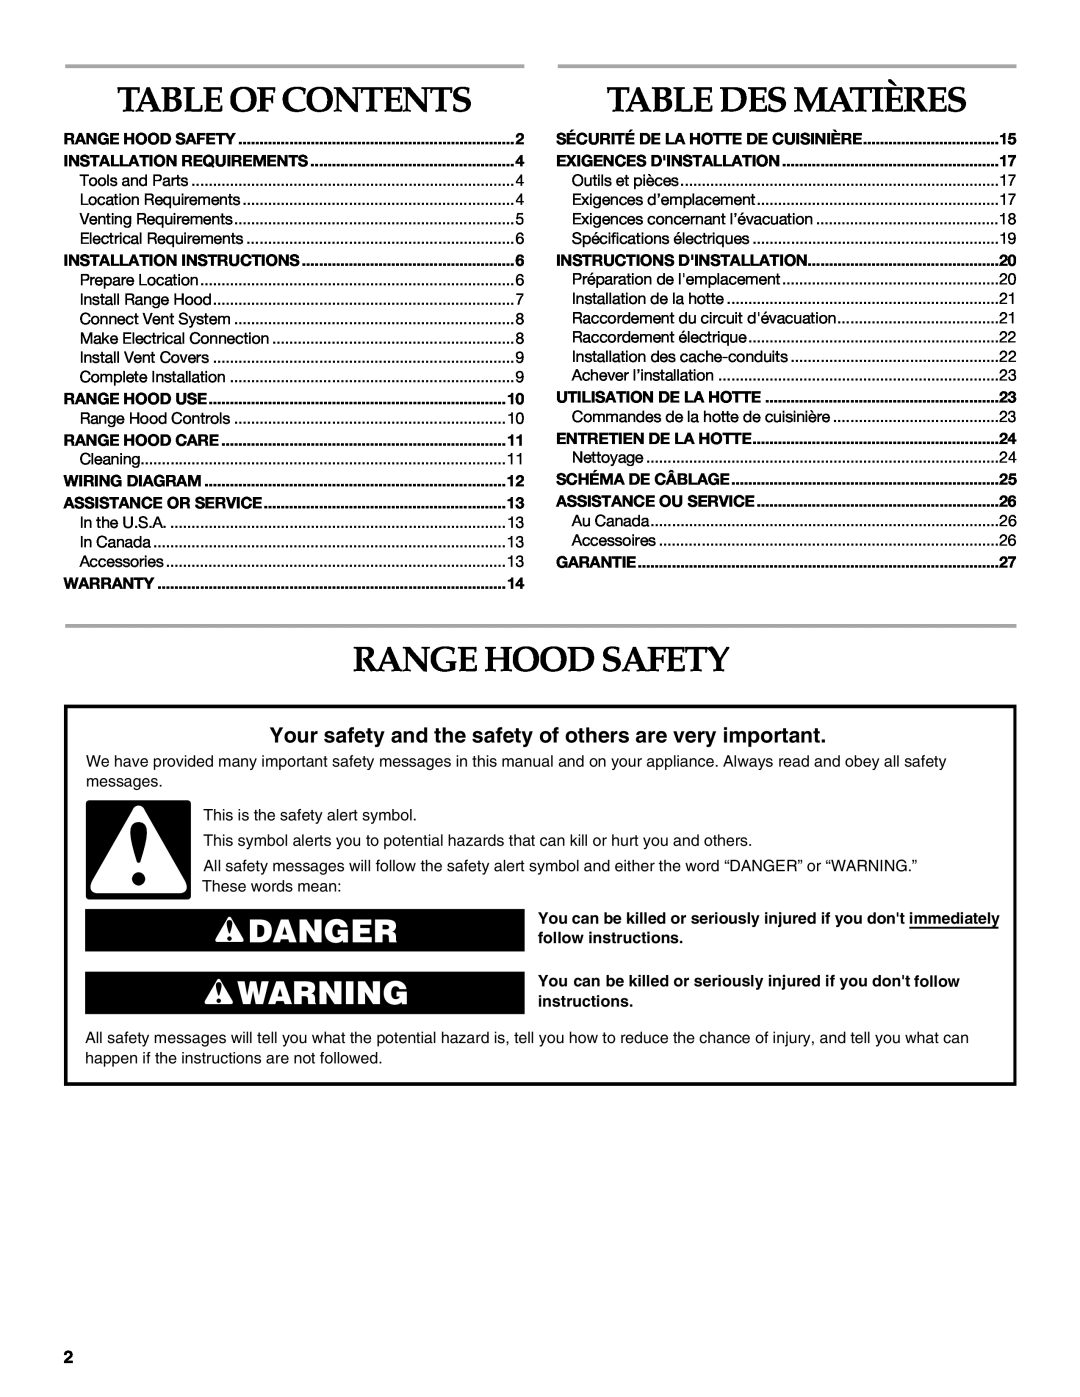 KitchenAid LI3Y7C/W10322991C Table Des Matières, Range Hood Safety, Danger, Installation Requirements, Range Hood Use 